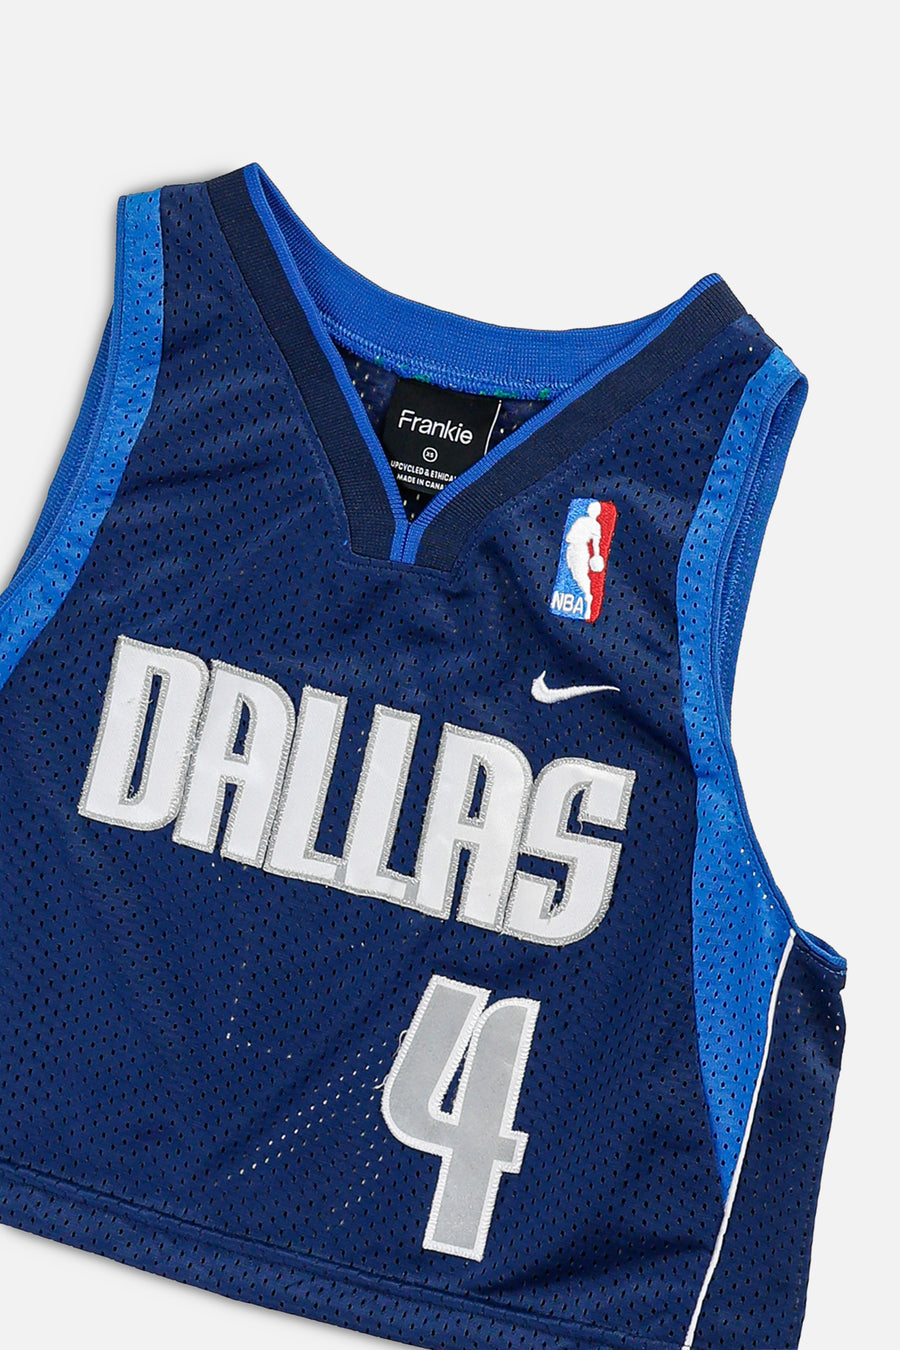 Rework Dallas Mavericks NBA Crop Jersey - XS